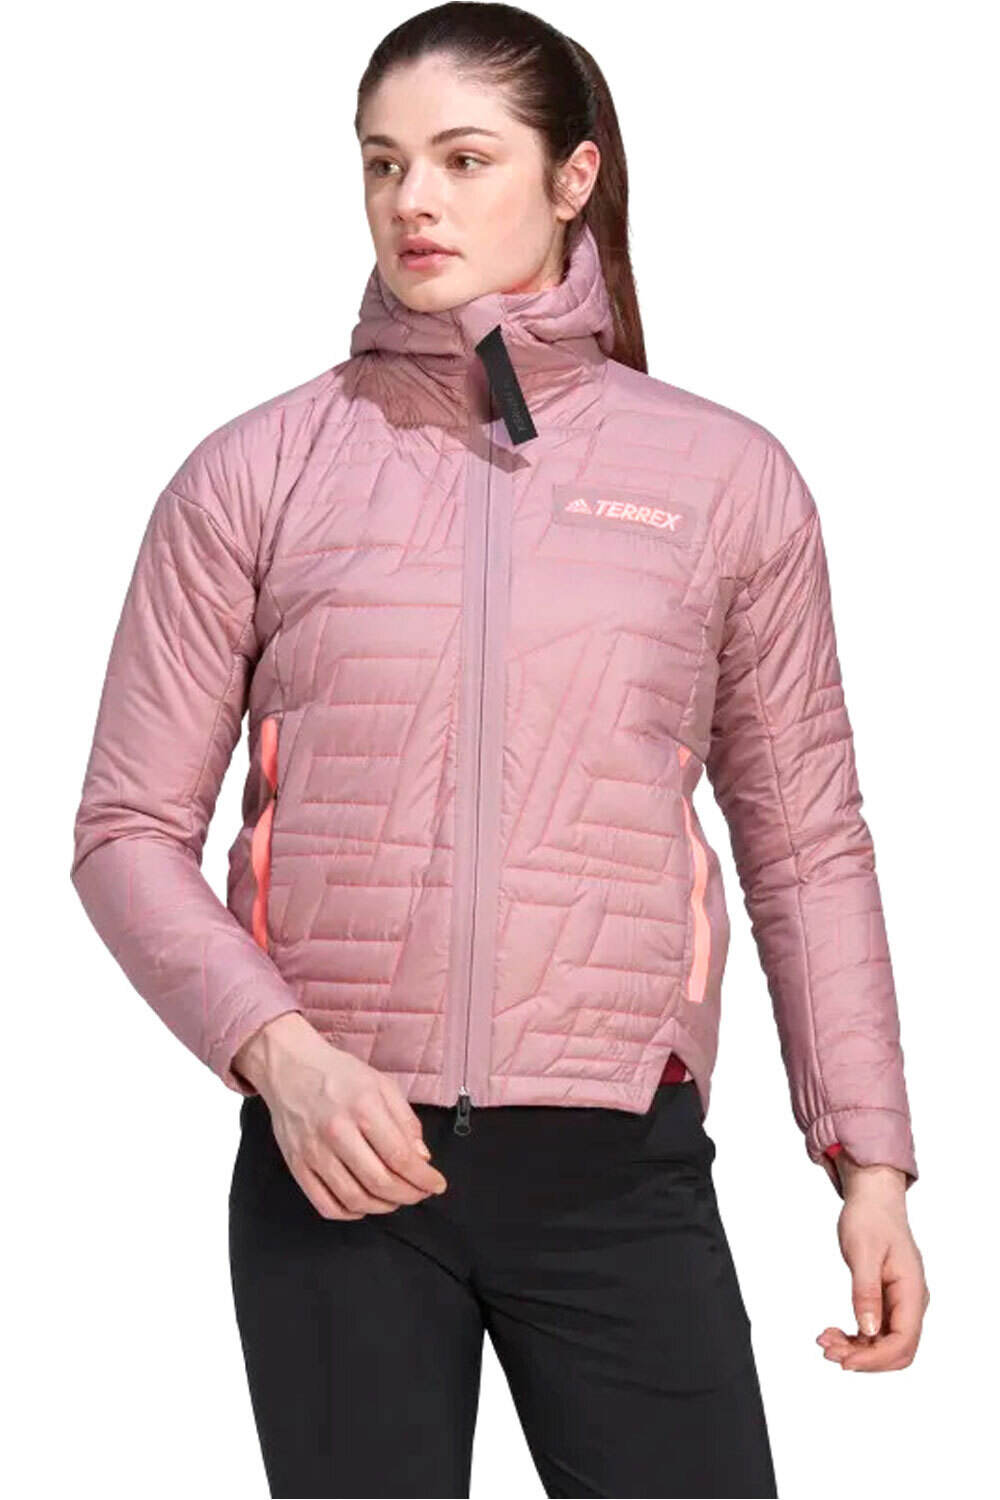 adidas chaqueta outdoor mujer Terrex MYSHELTER PrimaLoft (acolchada, con capucha) vista frontal